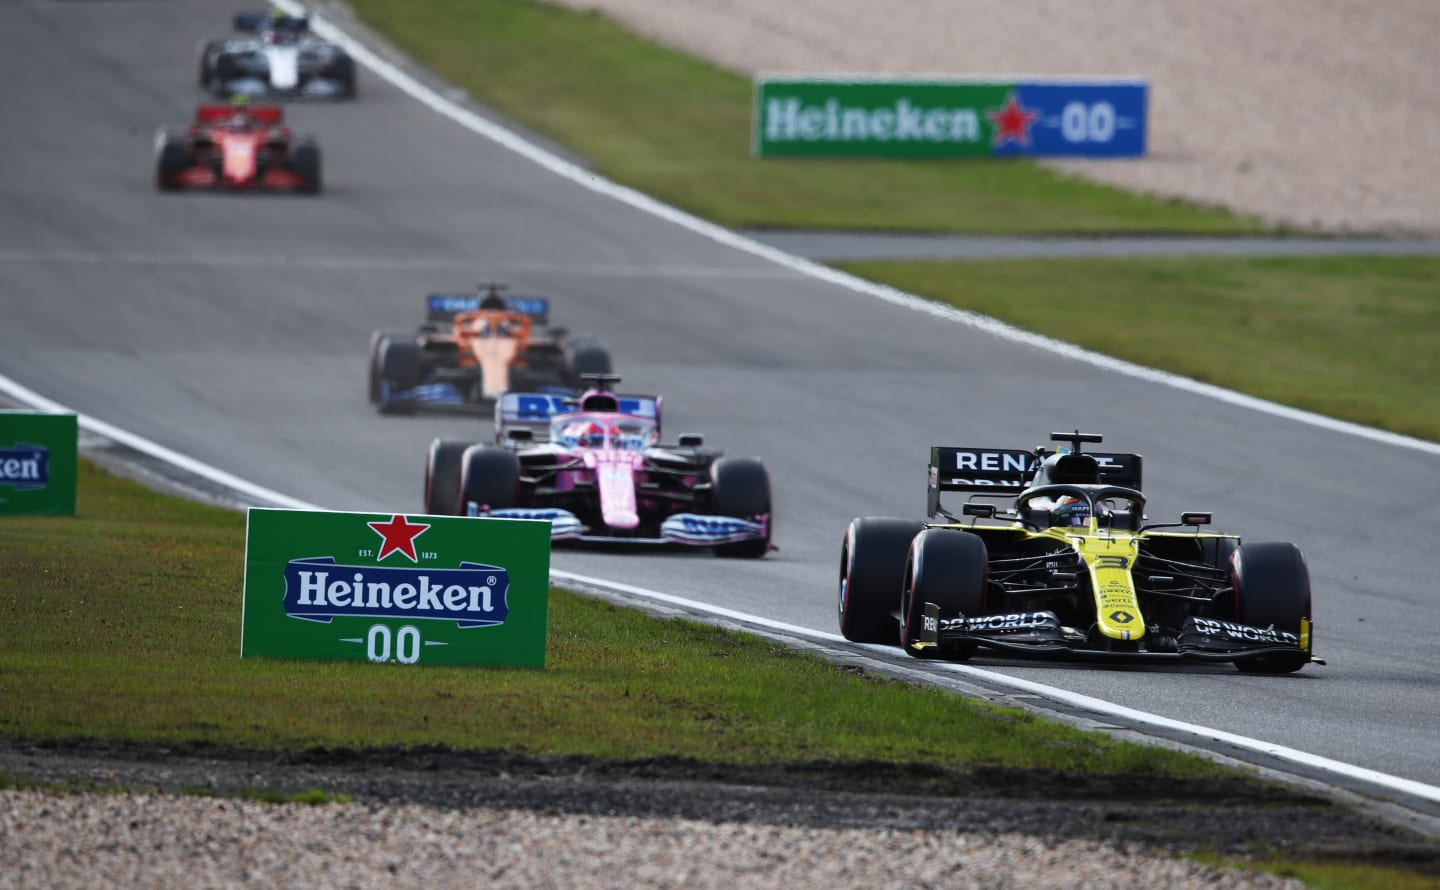 NUERBURG, GERMANY - OCTOBER 11: Daniel Ricciardo of Australia driving the (3) Renault Sport Formula